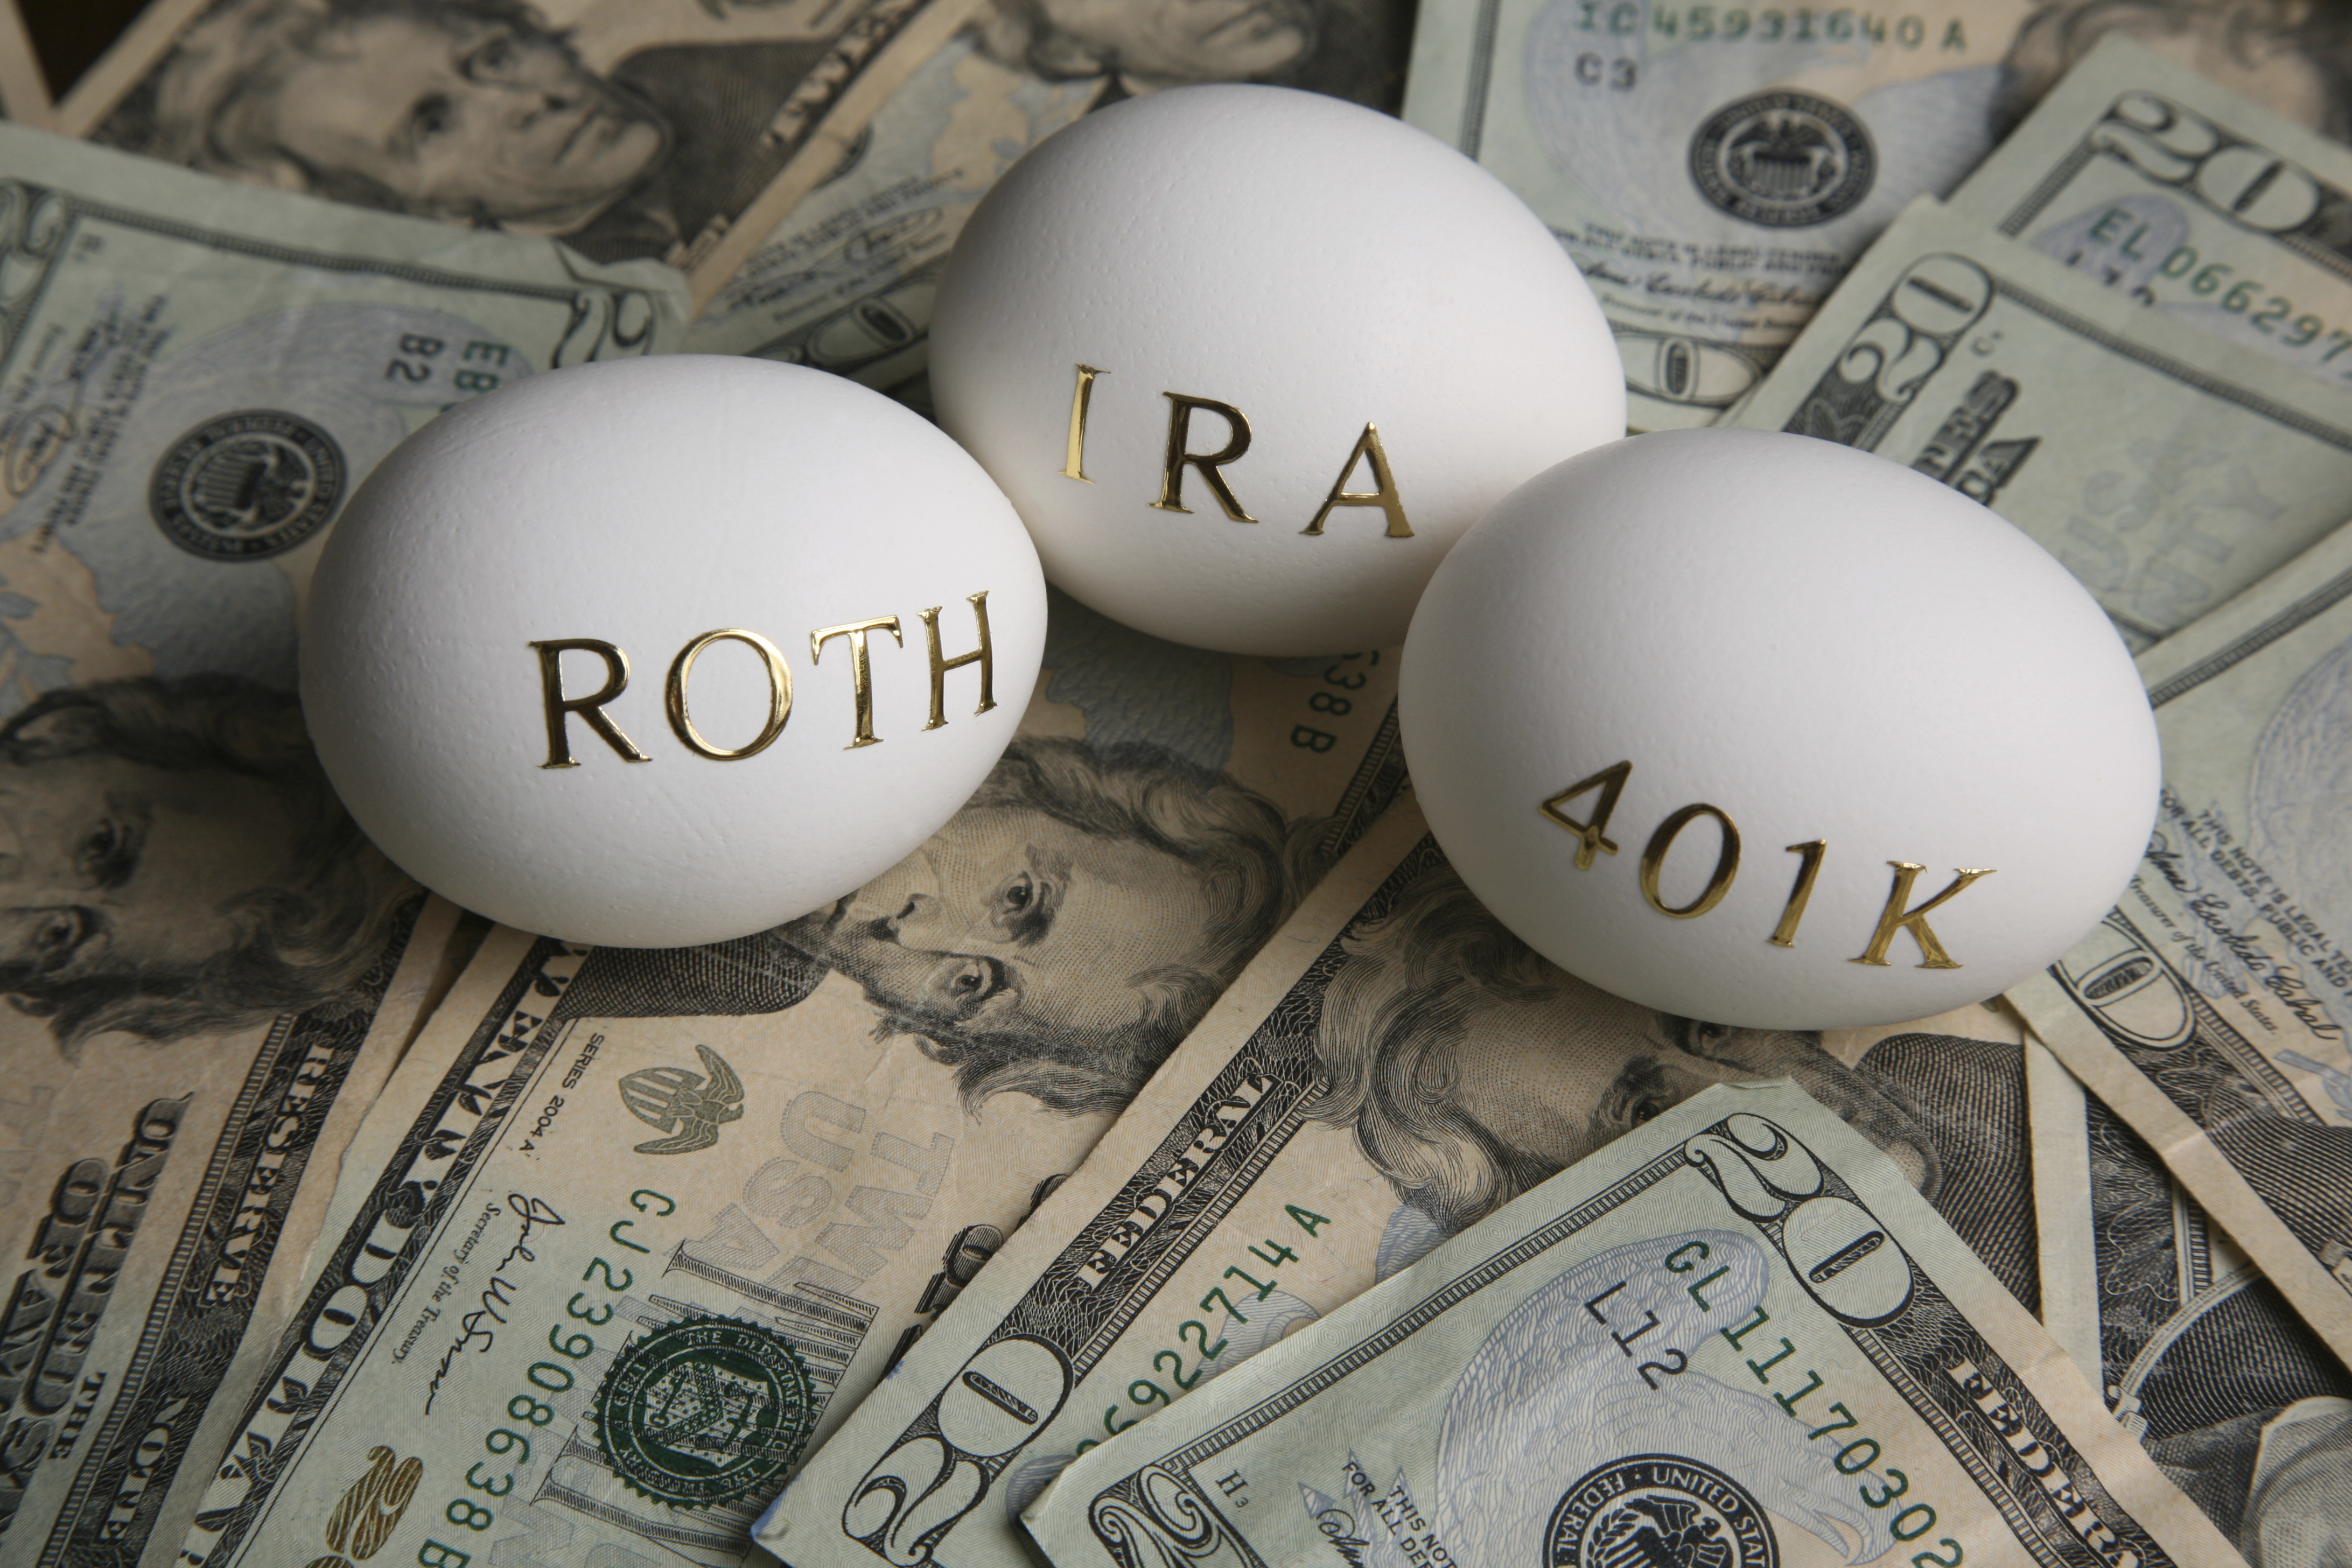 IRA-ROTH-401k-Eggs-Money